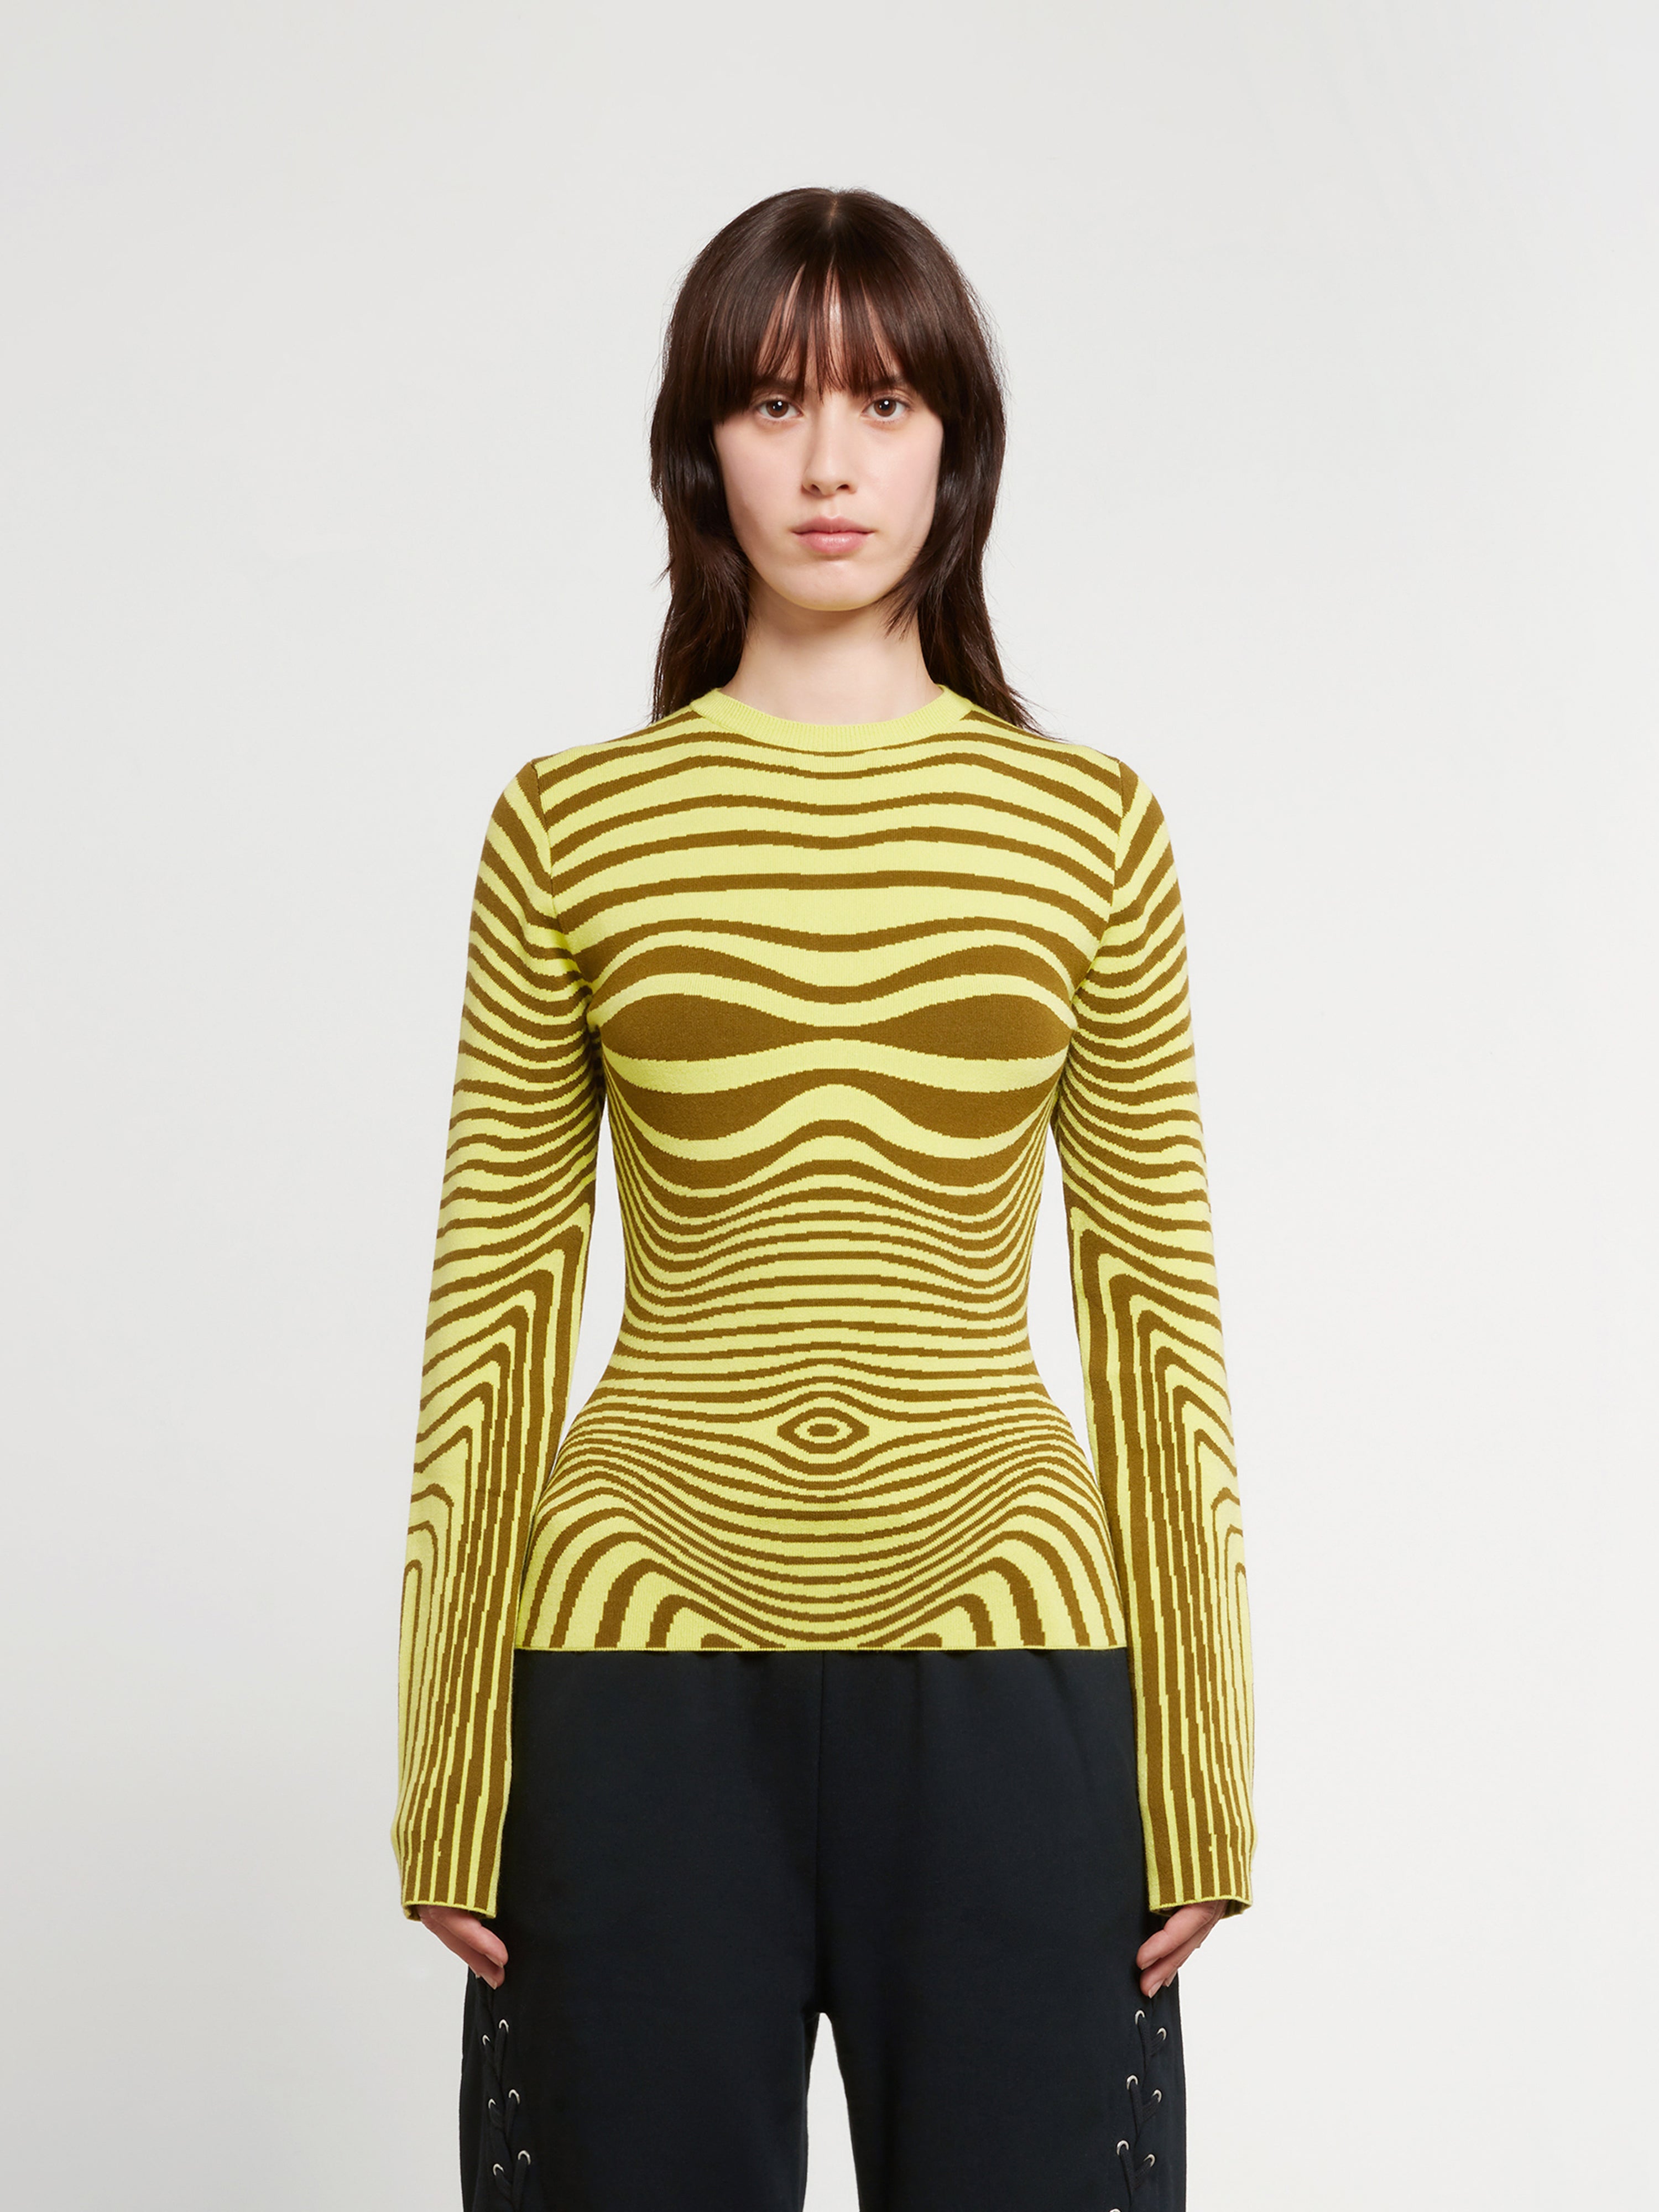 Jean Paul Gaultier - Women’s Printed Morphing Stripe Body Top - (Khaki/Lime)